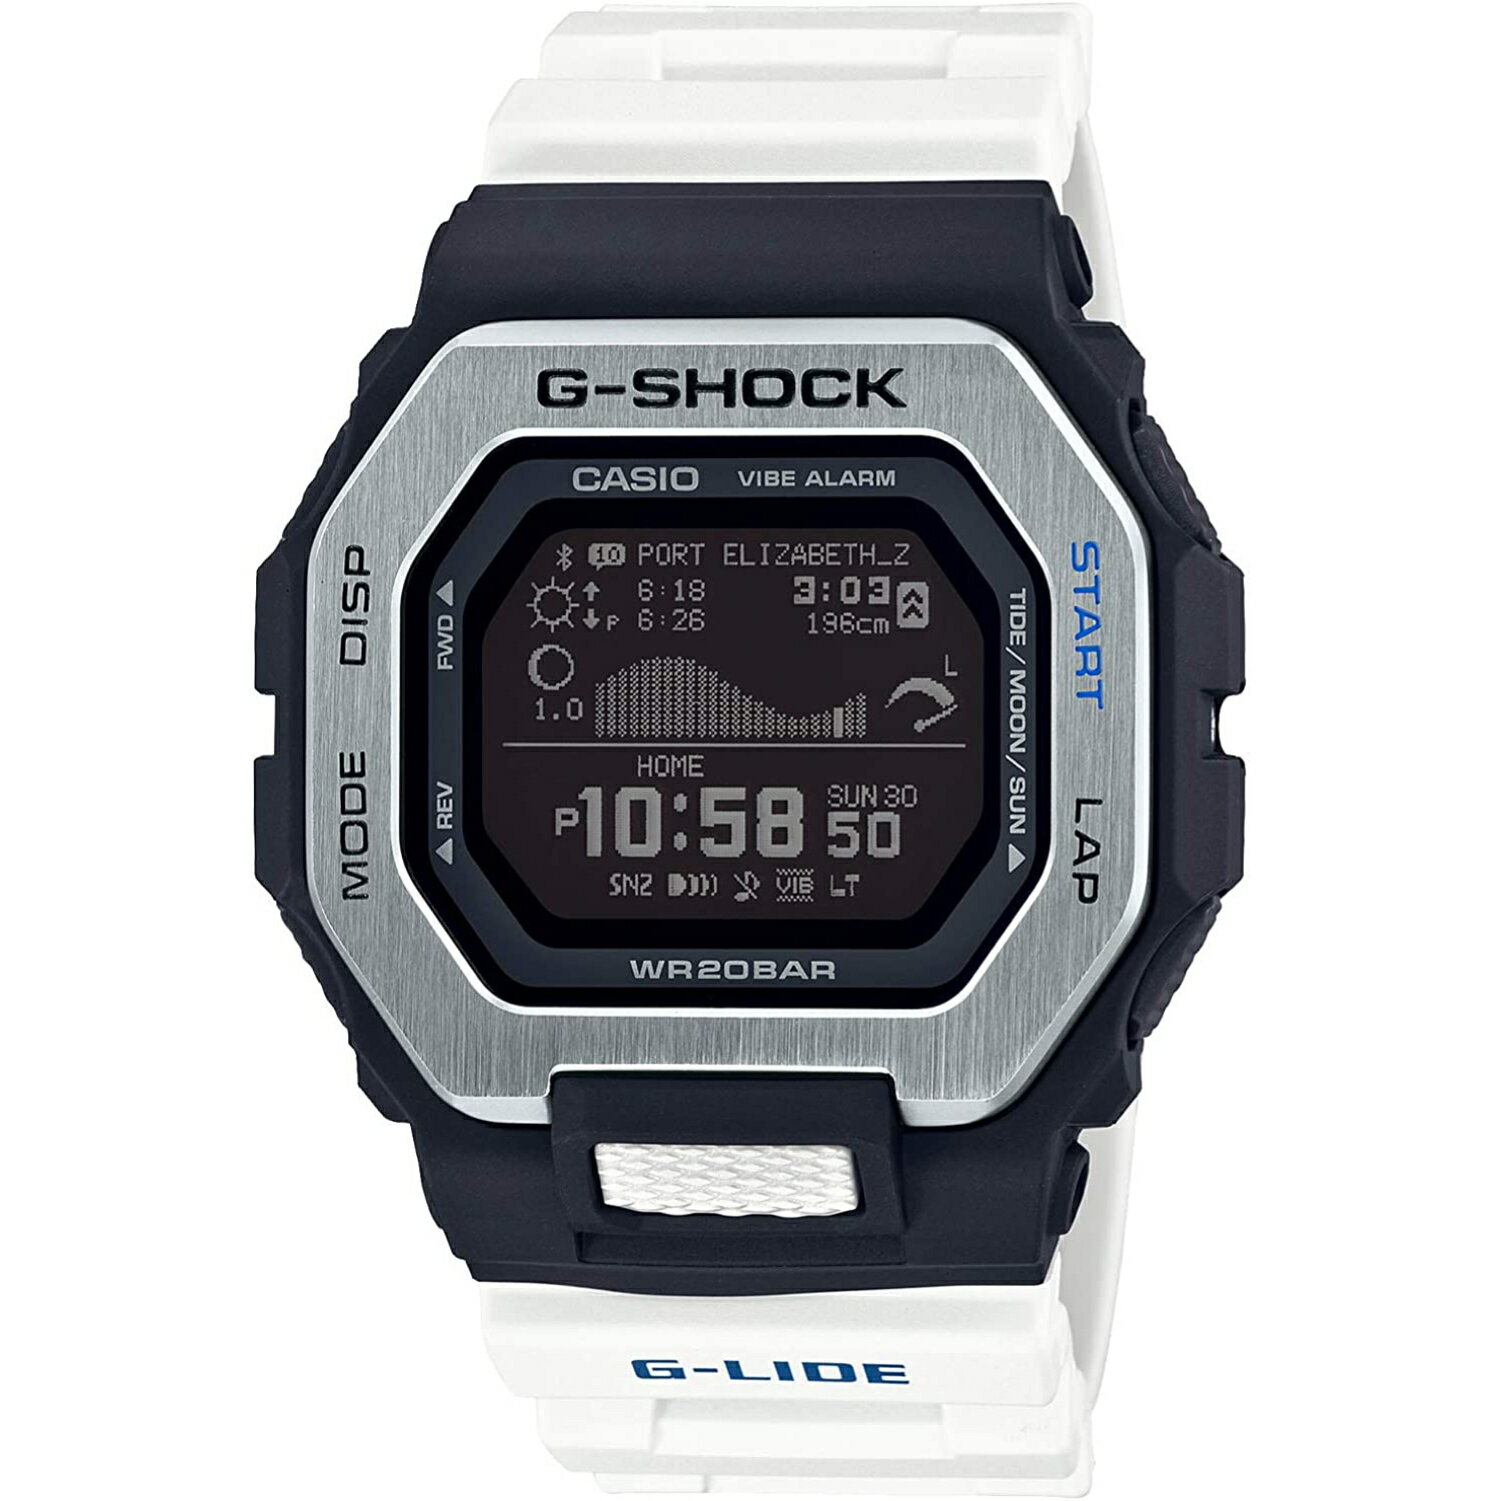 G-SHOCK Gショック Gライド メンズ 腕時計 GBX-100-7 CASIO カシオ 時計 Bluetooth タイドグラフ ブラック×ホワイト